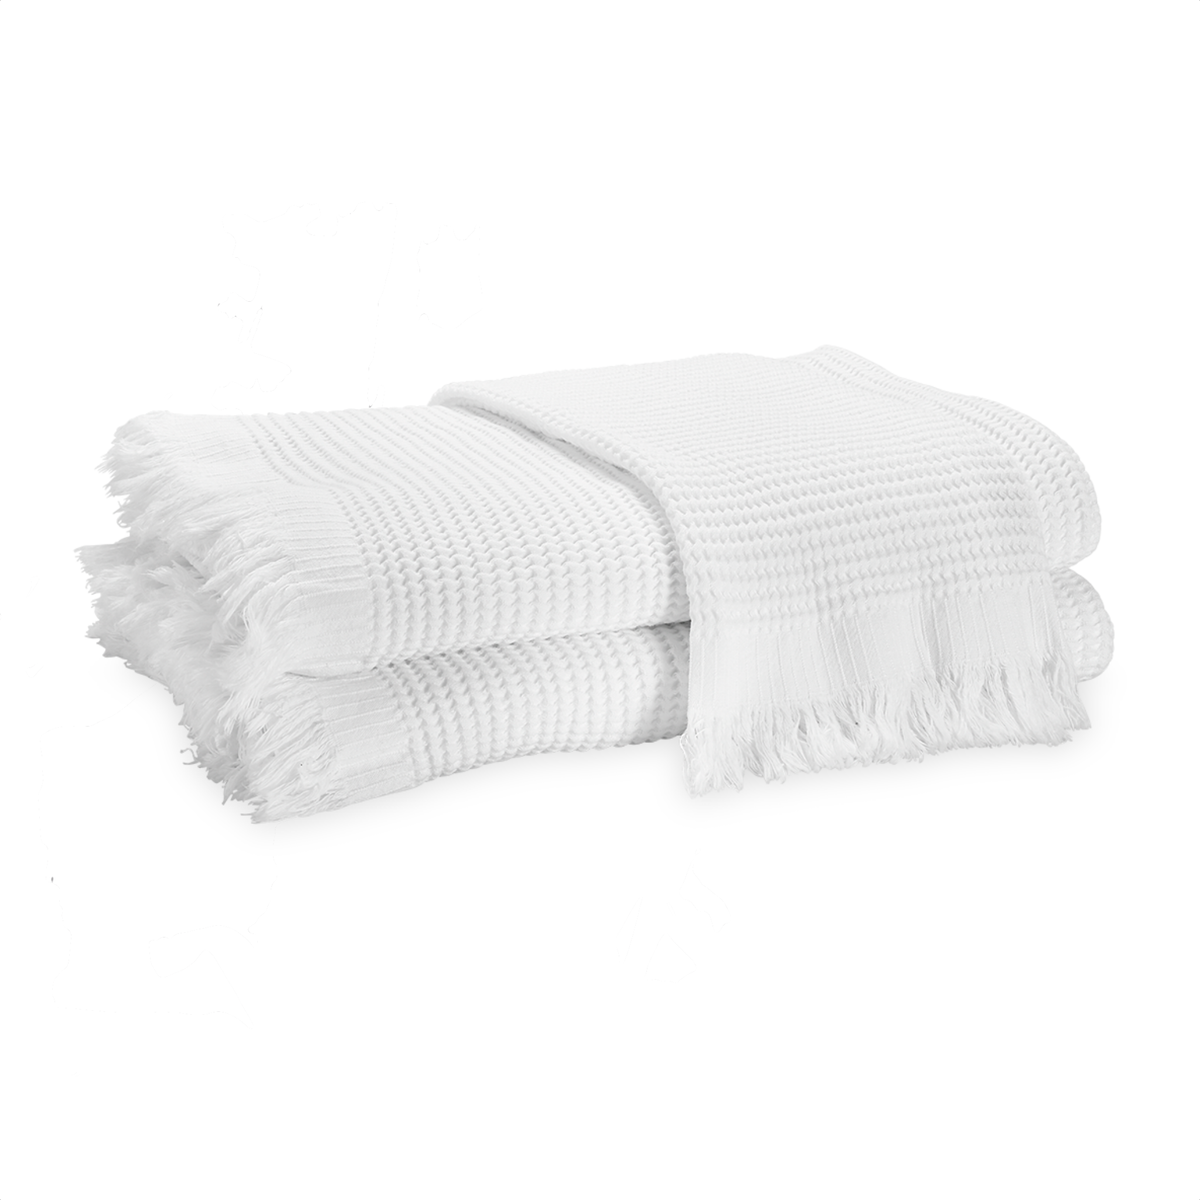 Folded Matouk Kiran Waffle Towels in White